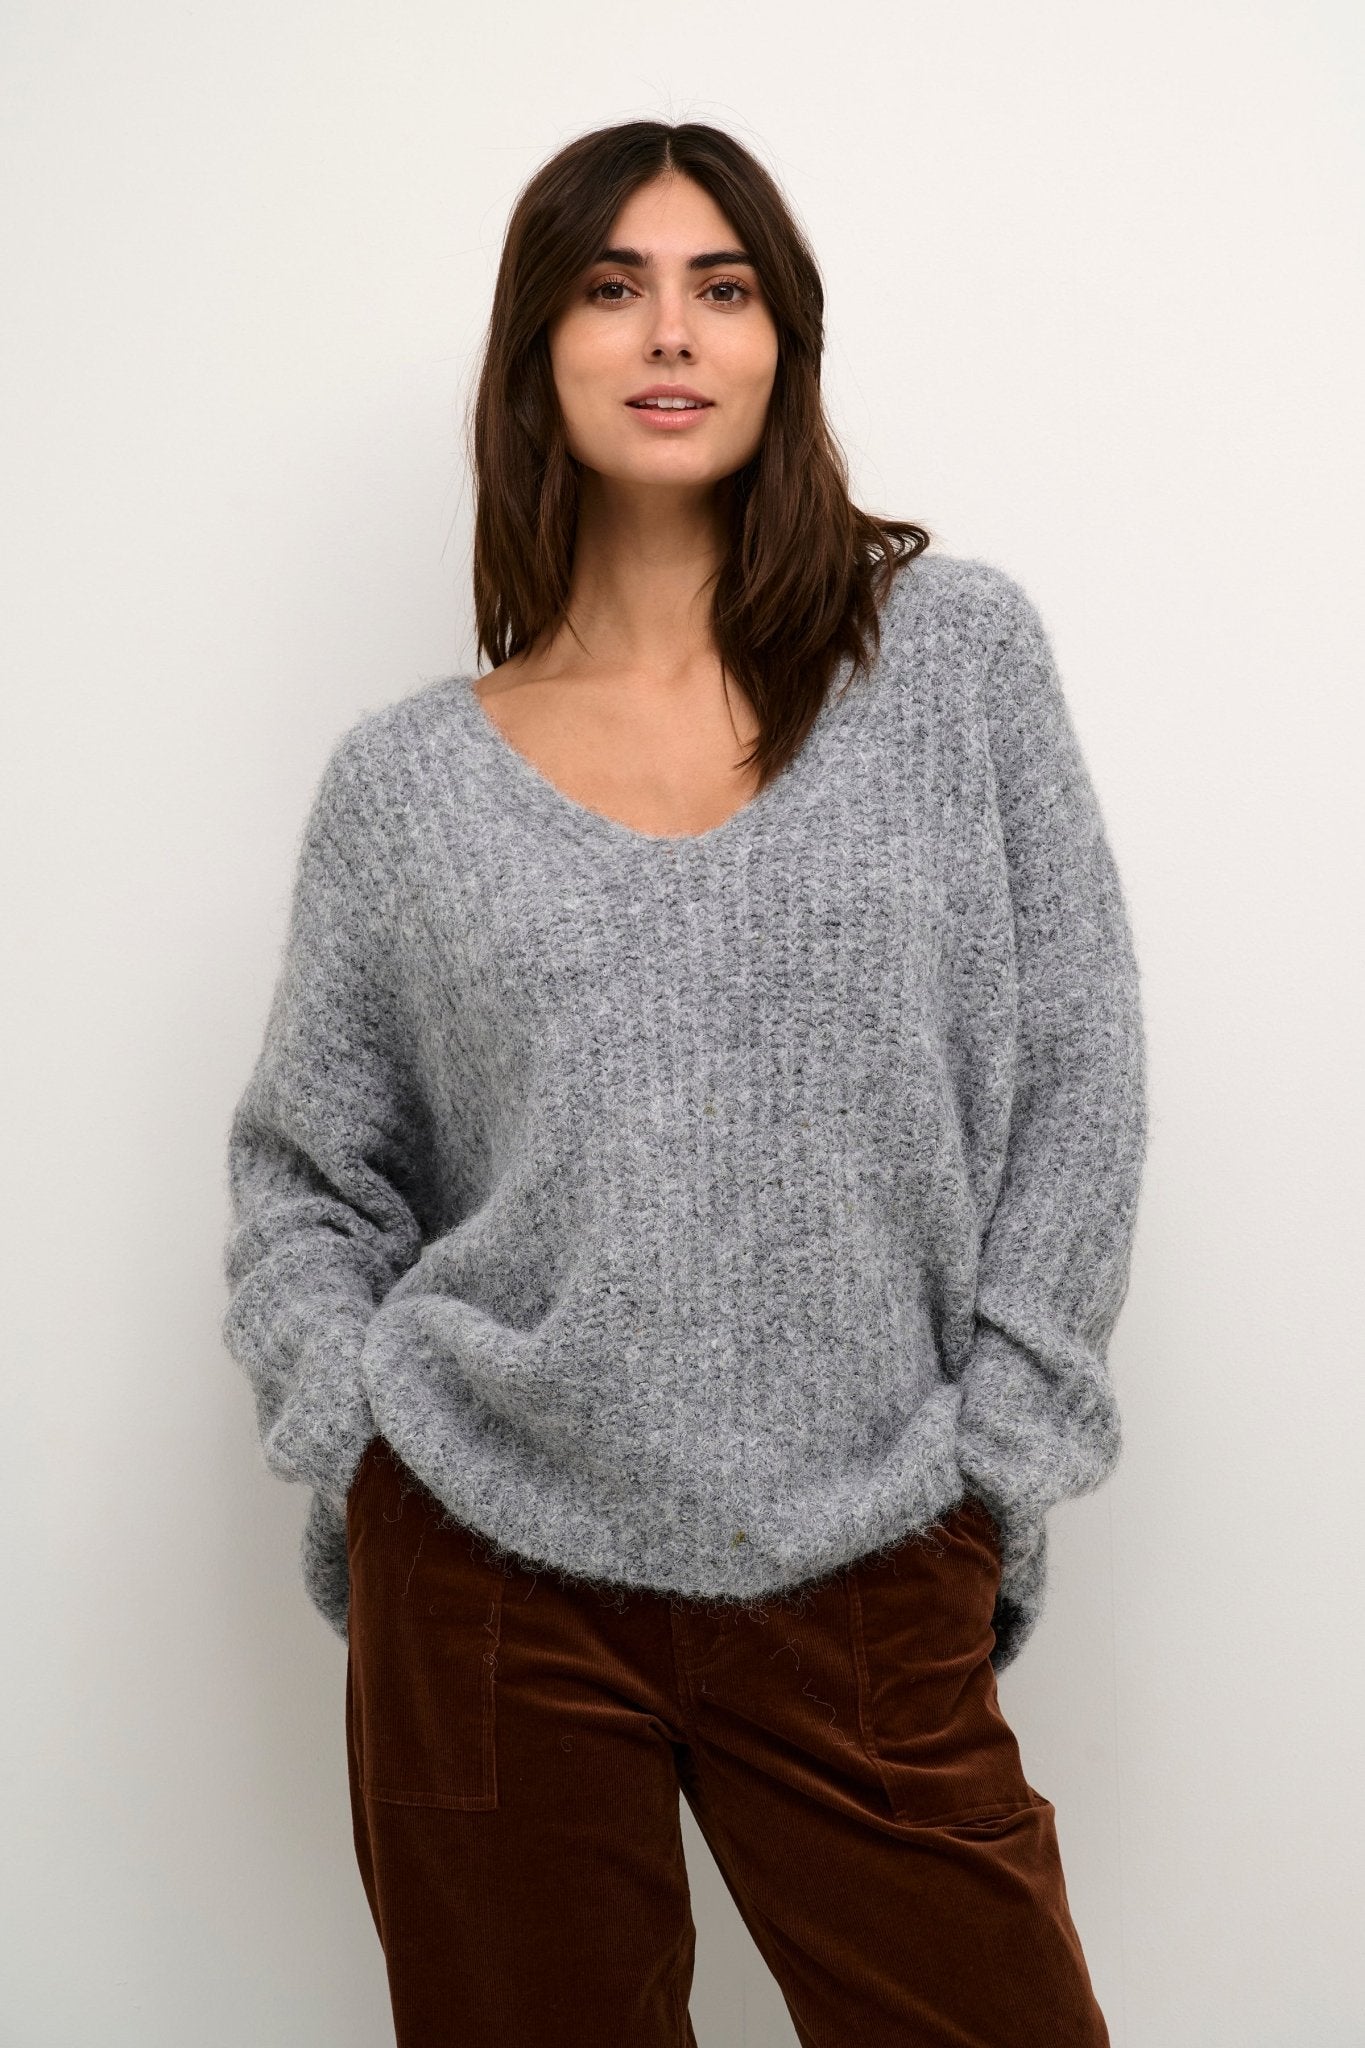 Brava knit pullover by Culture - Grey melange - Blue Sky Fashions & Lingerie